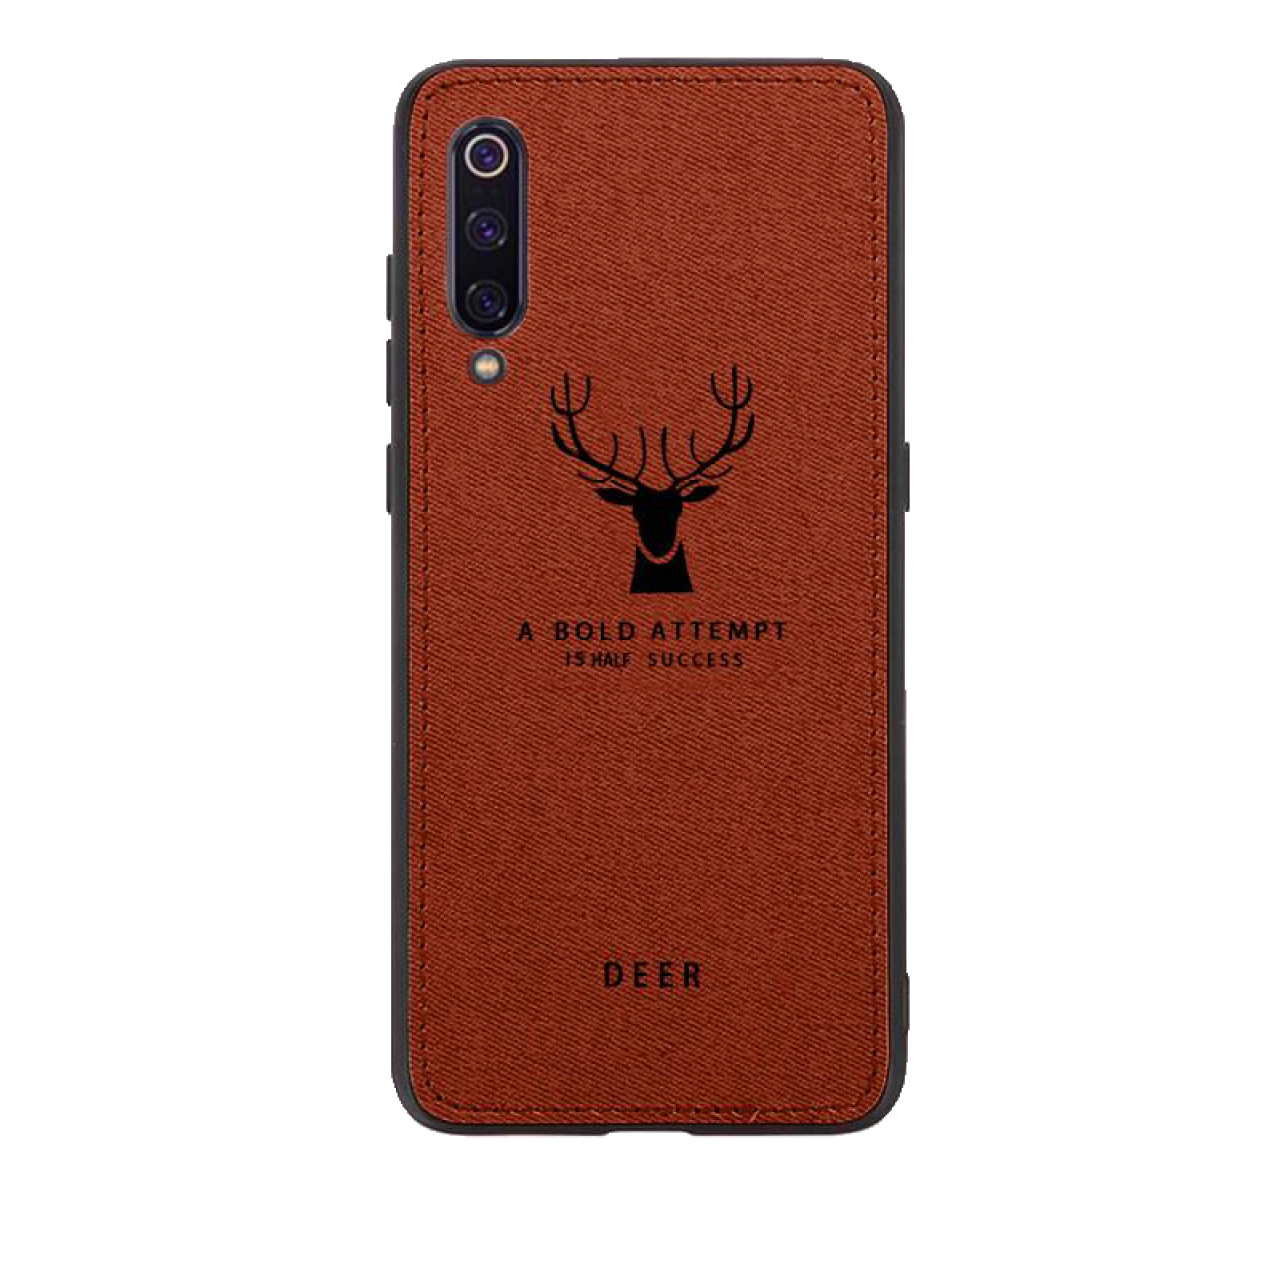 Deer Cloth Case For Xiaomi Mi 9 - Brown